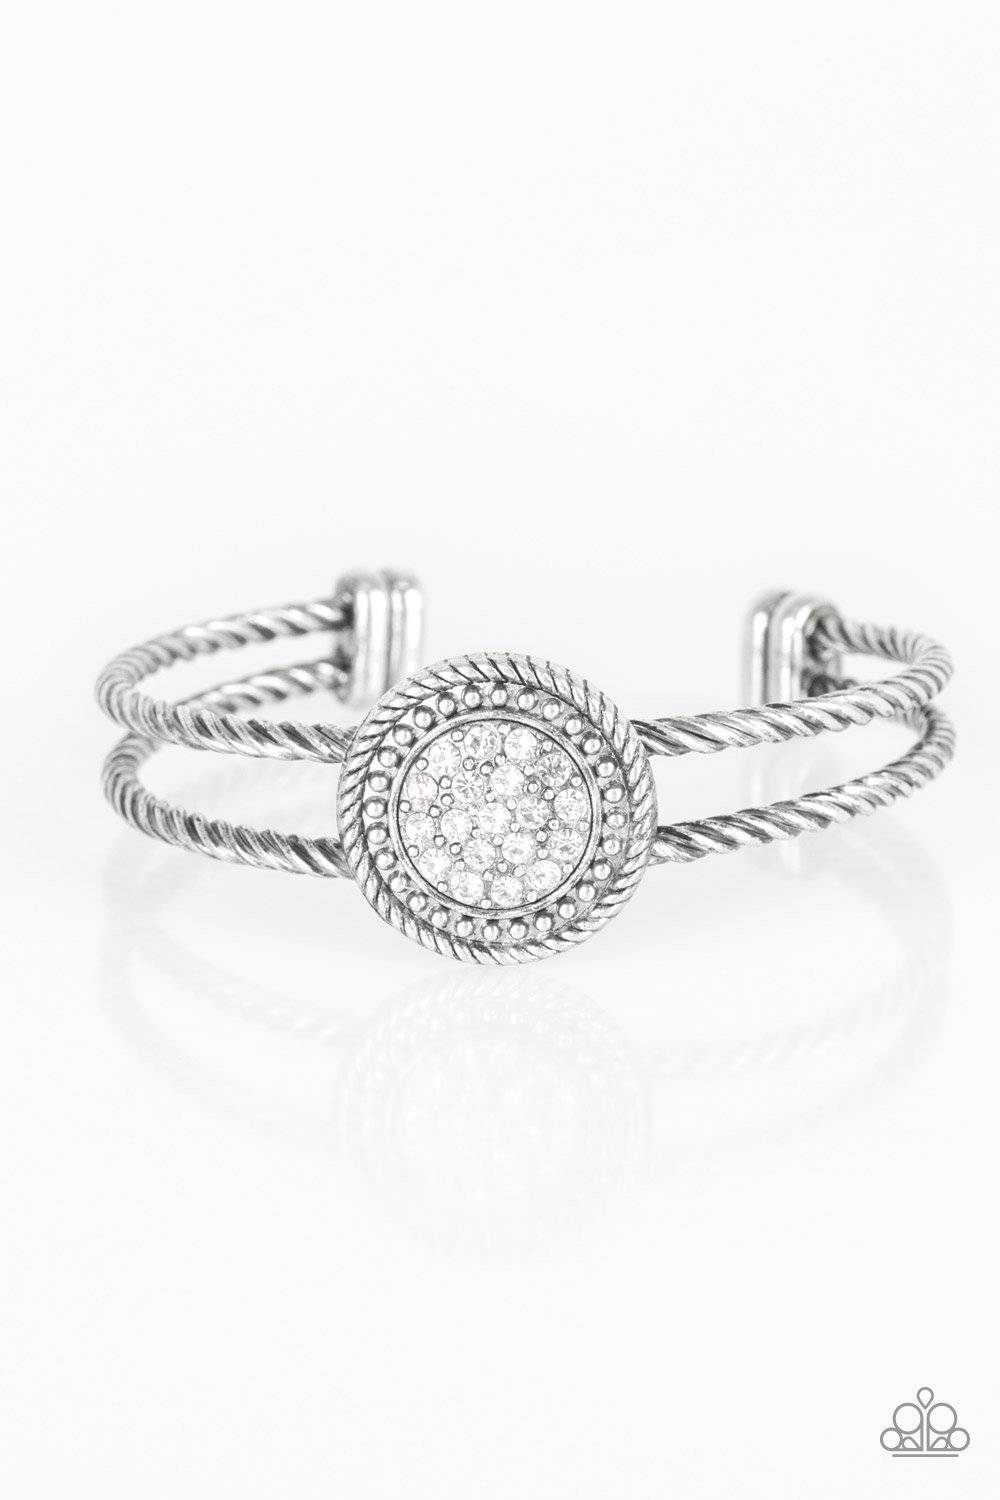 Definitely Dazzling - White Rhinestone Bracelet - Paparazzi Accessories - GlaMarous Titi Jewels